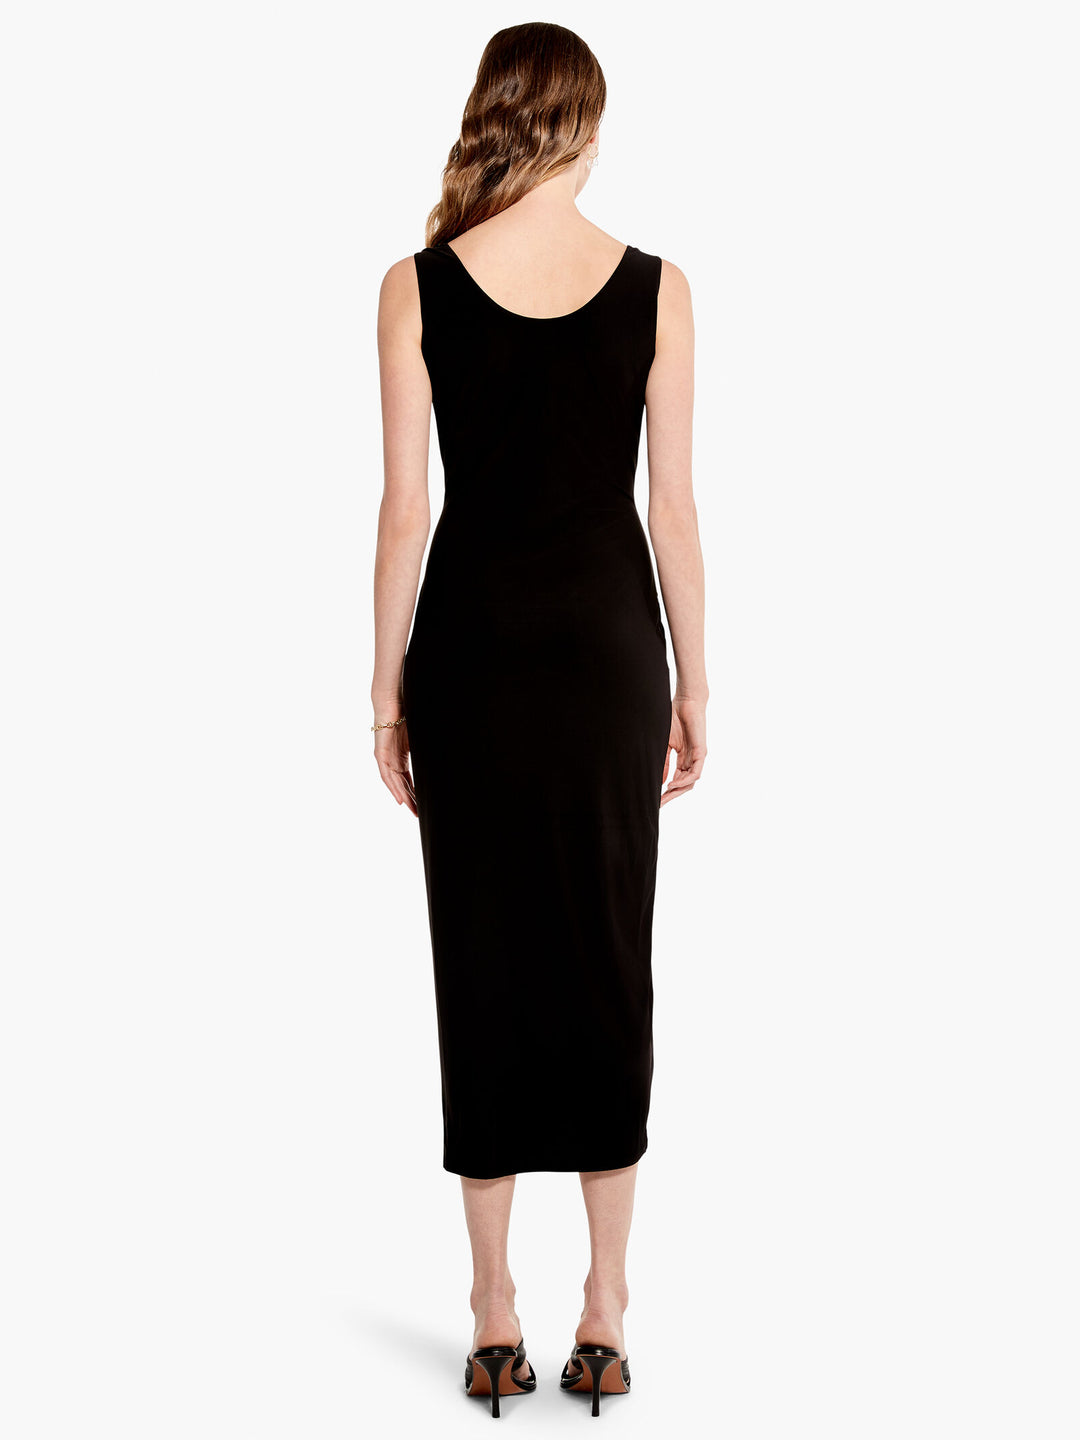 Ruched Perfect Black Dress M231203